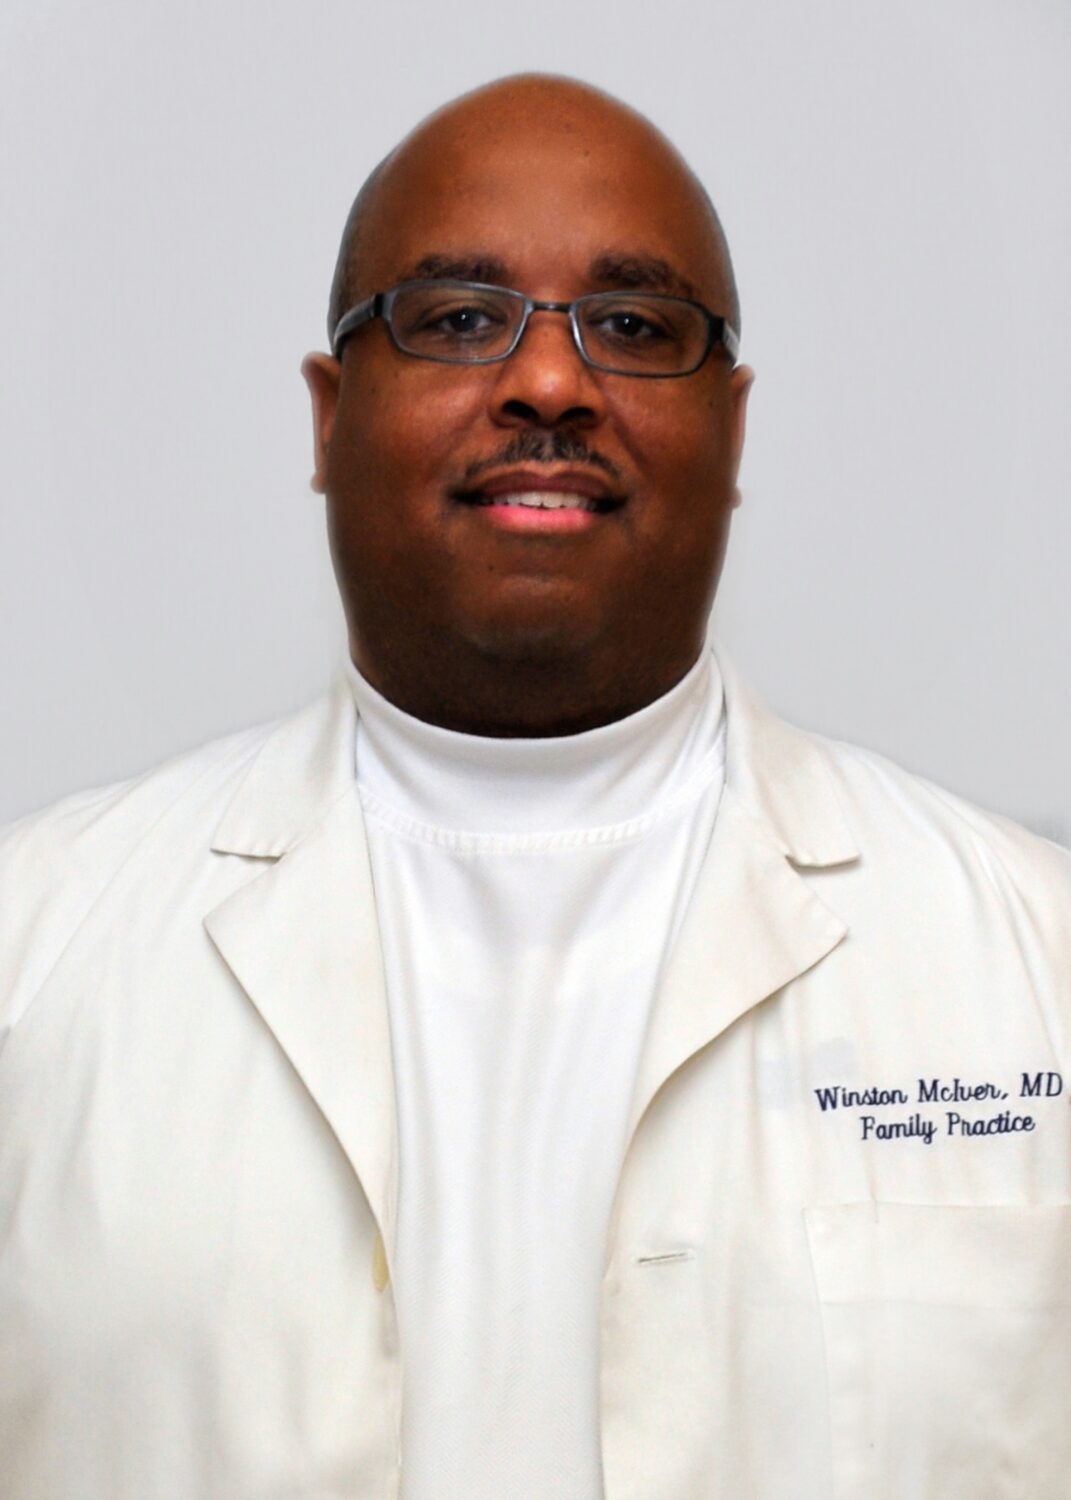 Winston D. McIver, Jr., MD